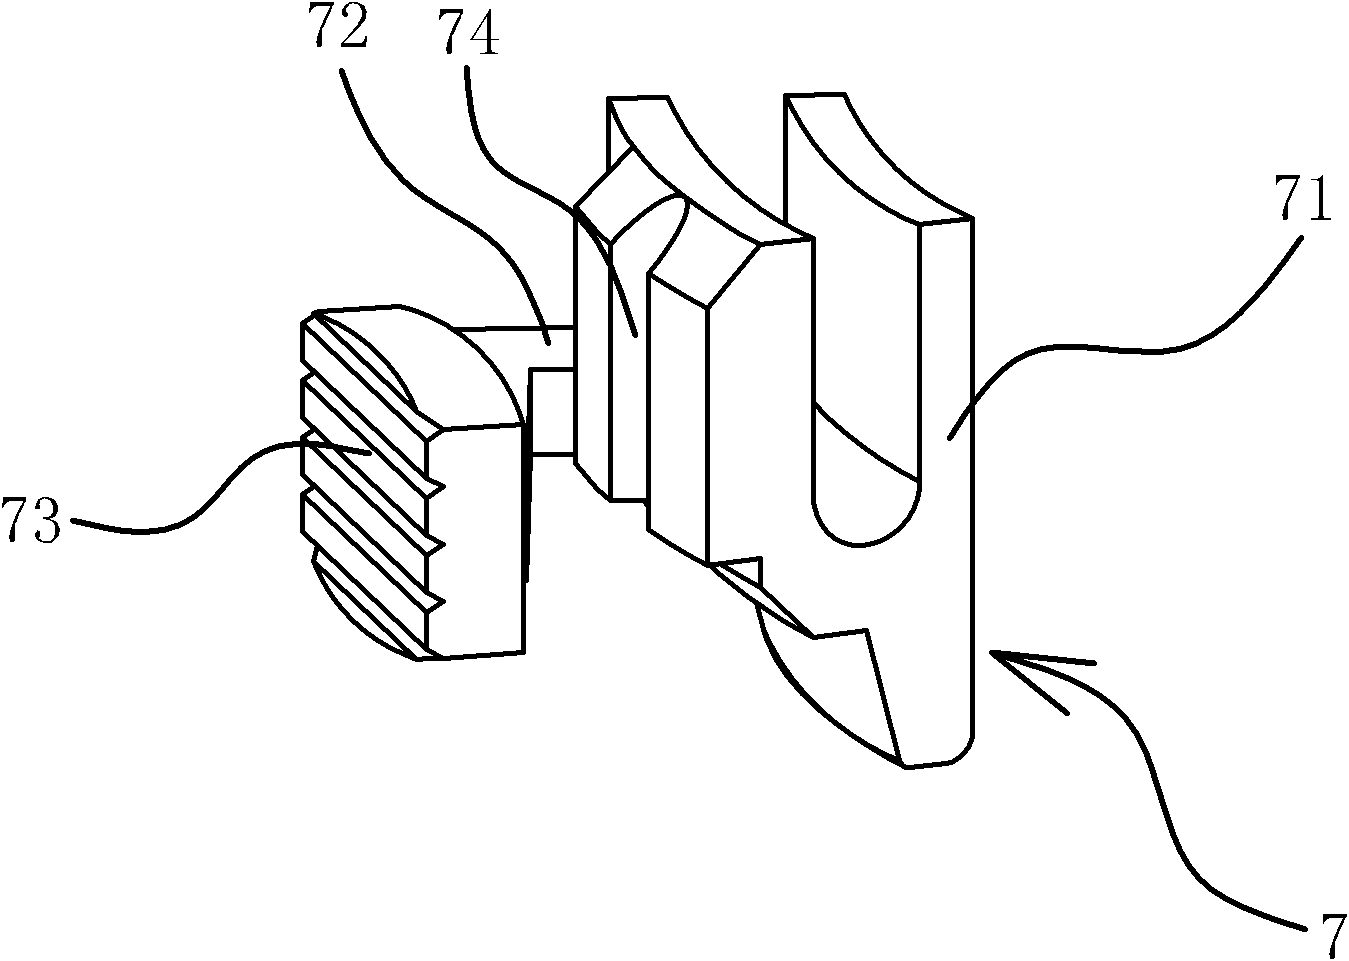 Hand wheel component of temperature control valve